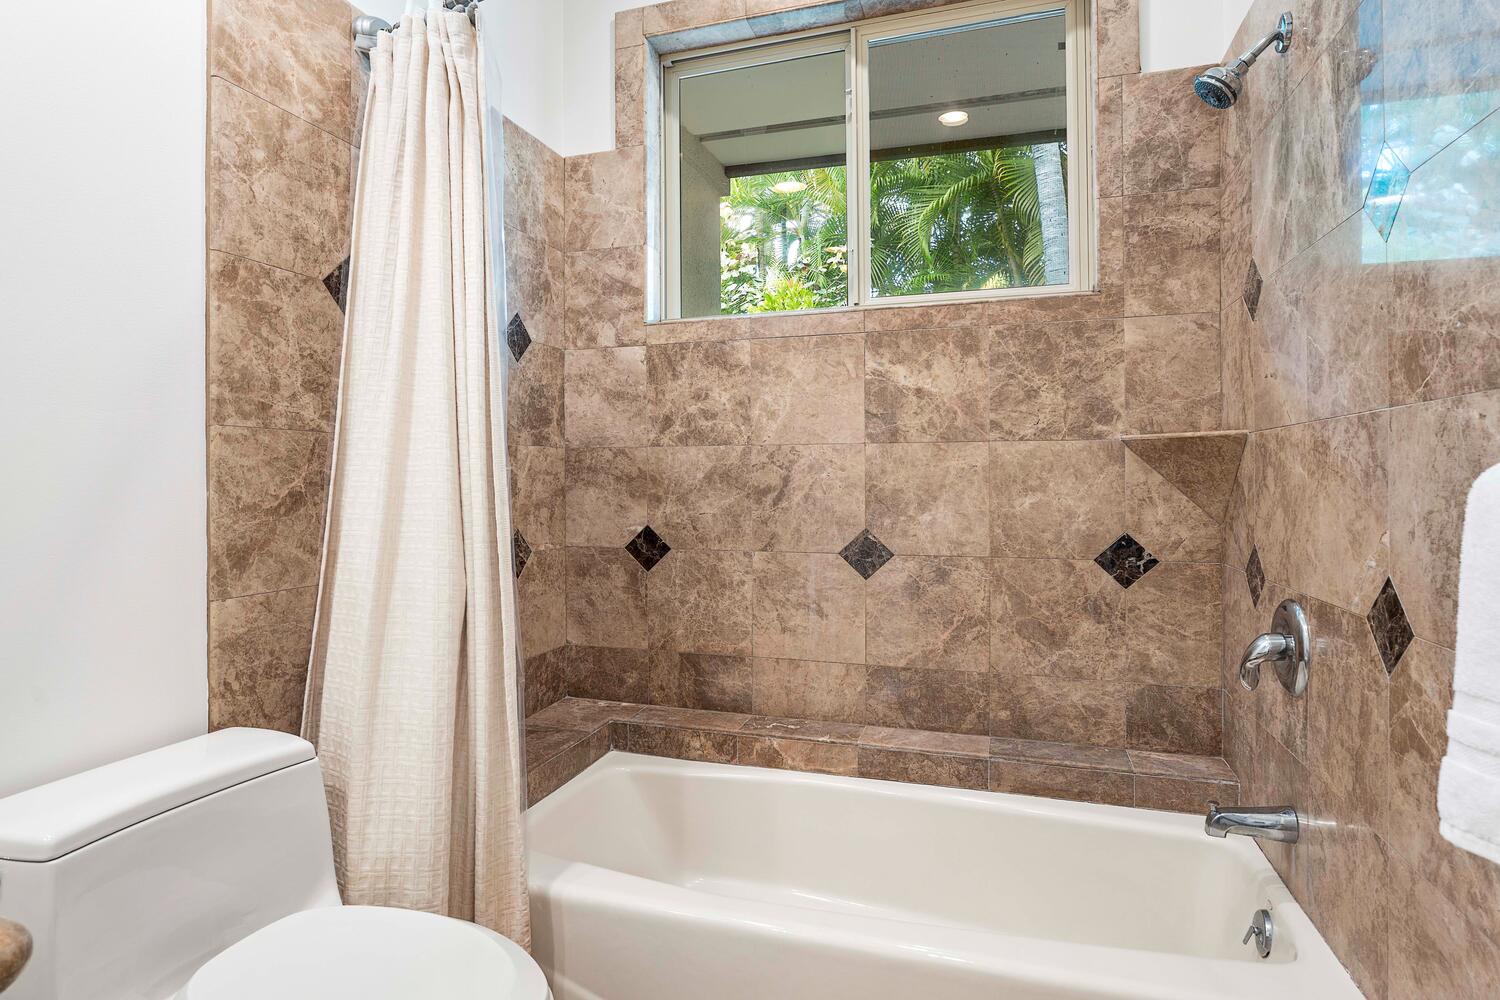 Kailua Kona Vacation Rentals, Blue Hawaii - The ensuite bathroom with a shower/tub combo.